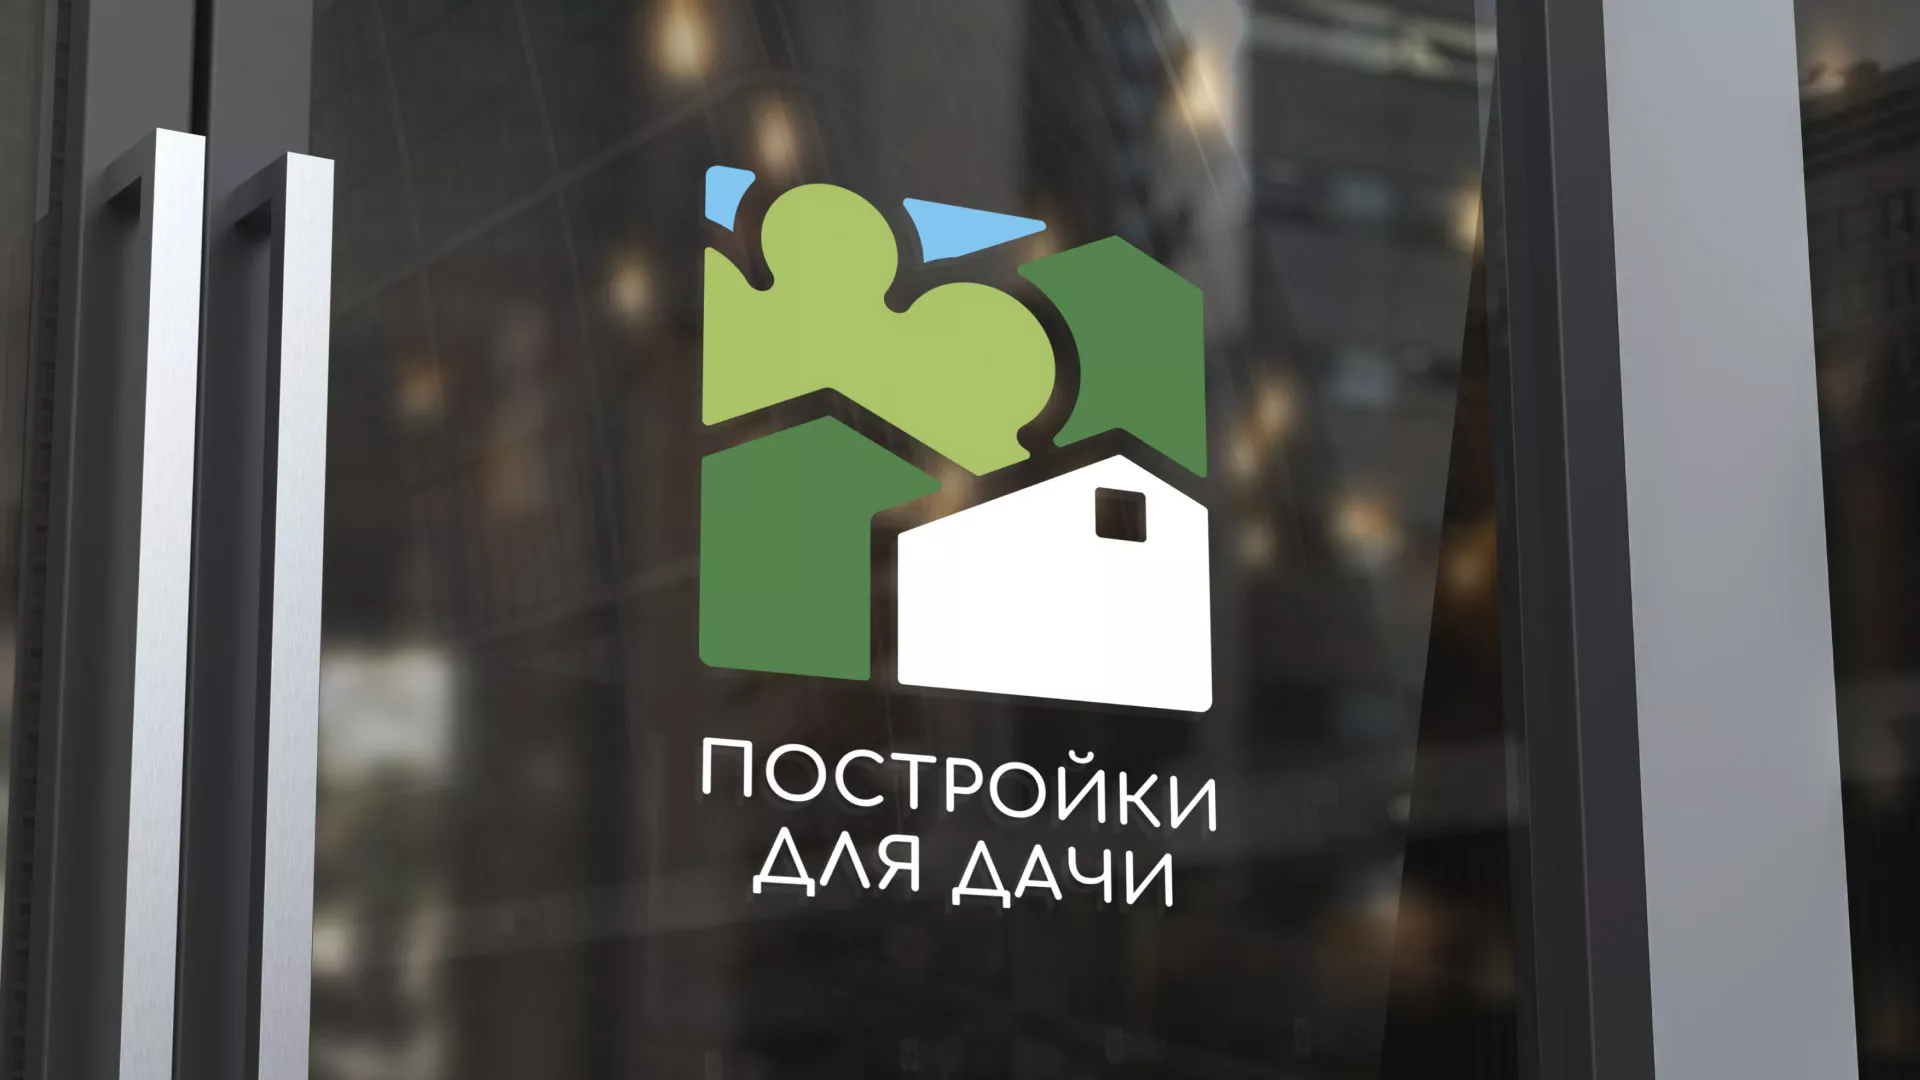 Разработка логотипа в Юхнове для компании «Постройки для дачи»